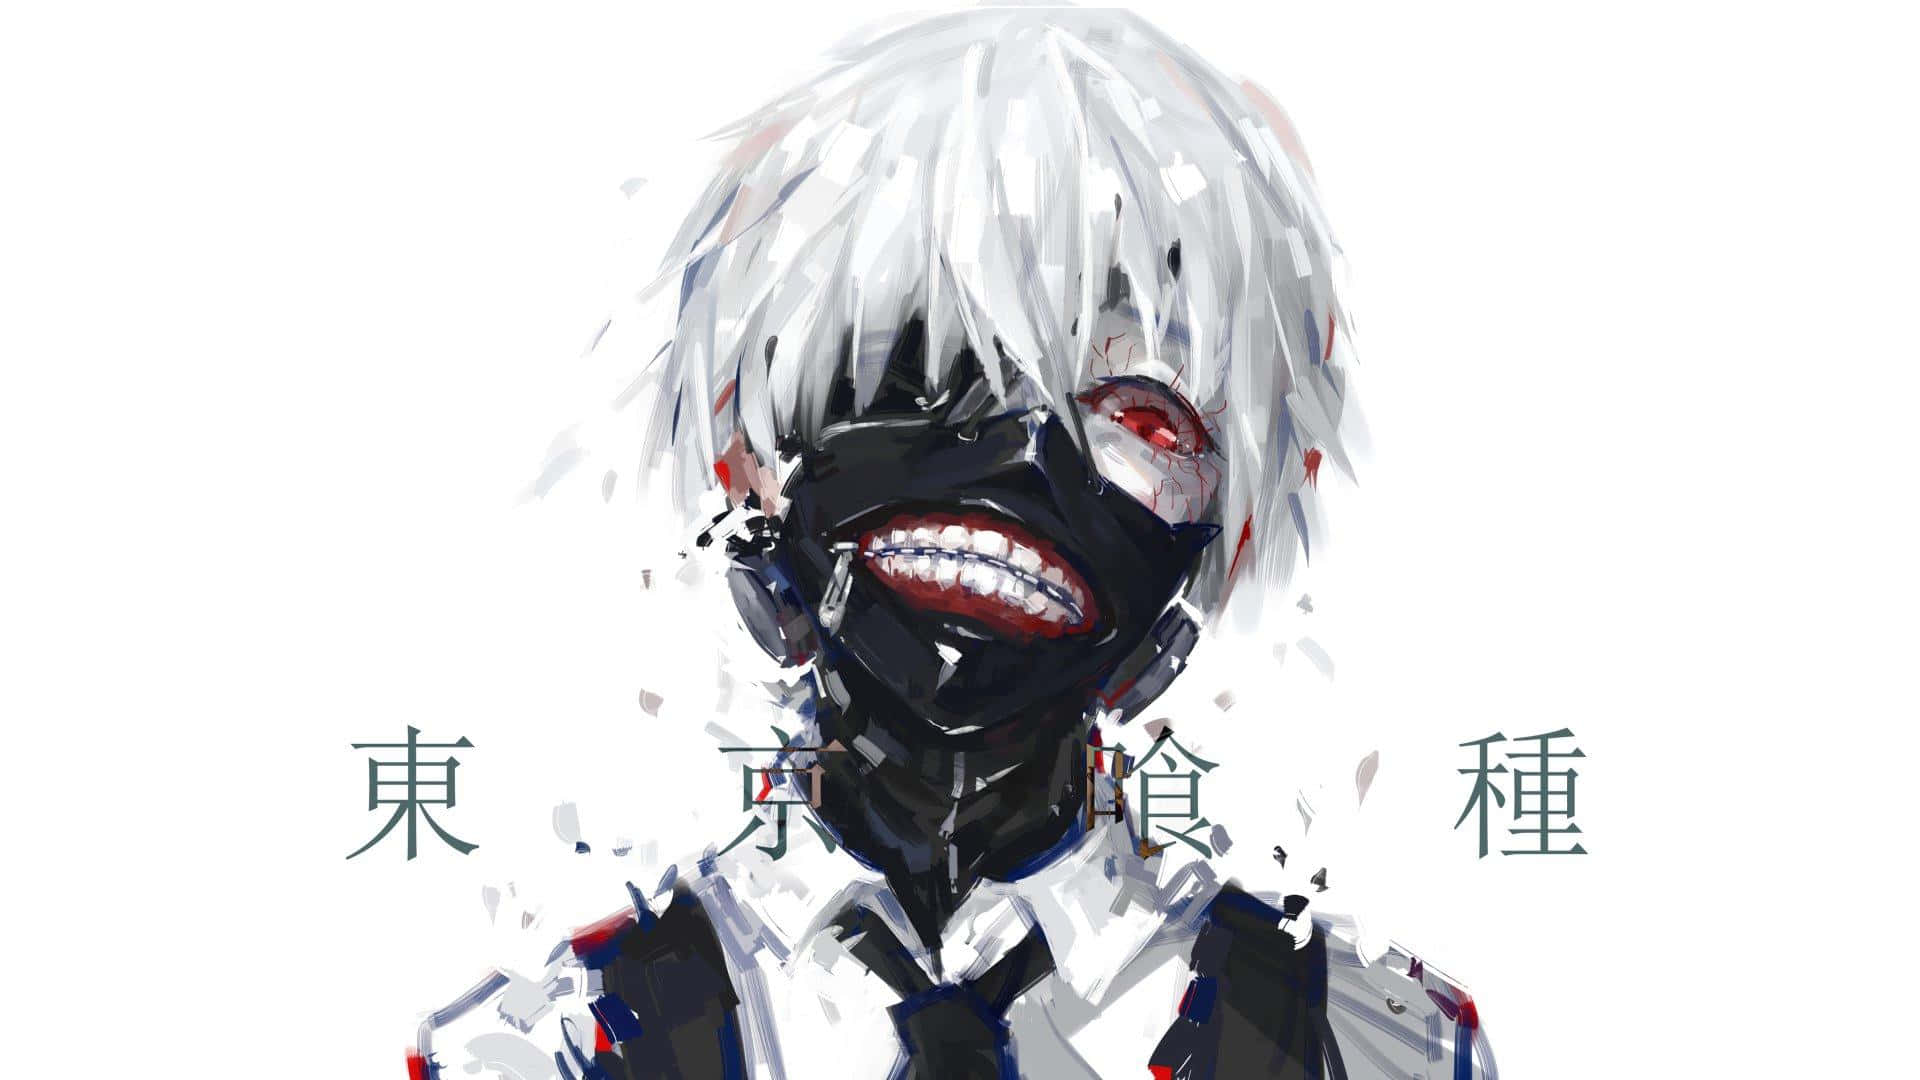 Kaneki's mask - an iconic part of Tokyo Ghoul Wallpaper